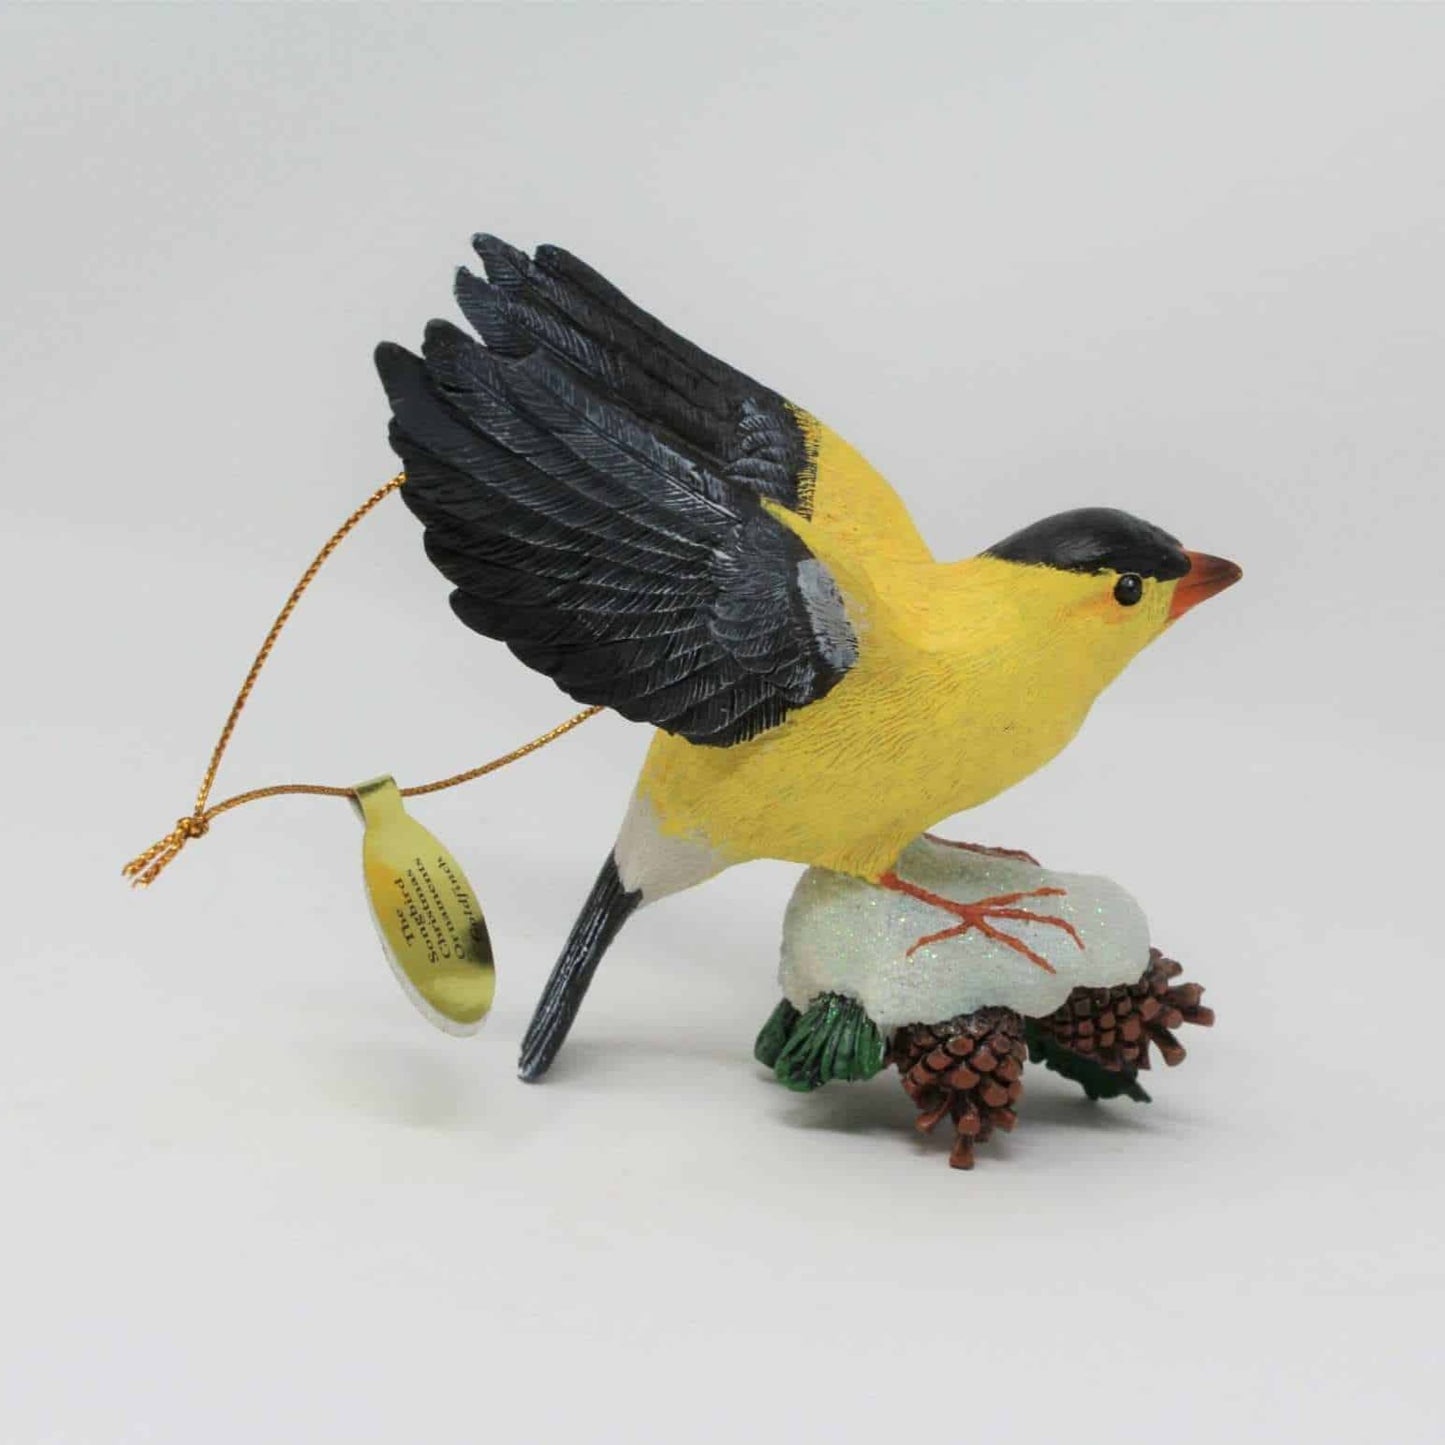 Ornament, Danbury Mint Songbird Collection, Goldfinch, 2004